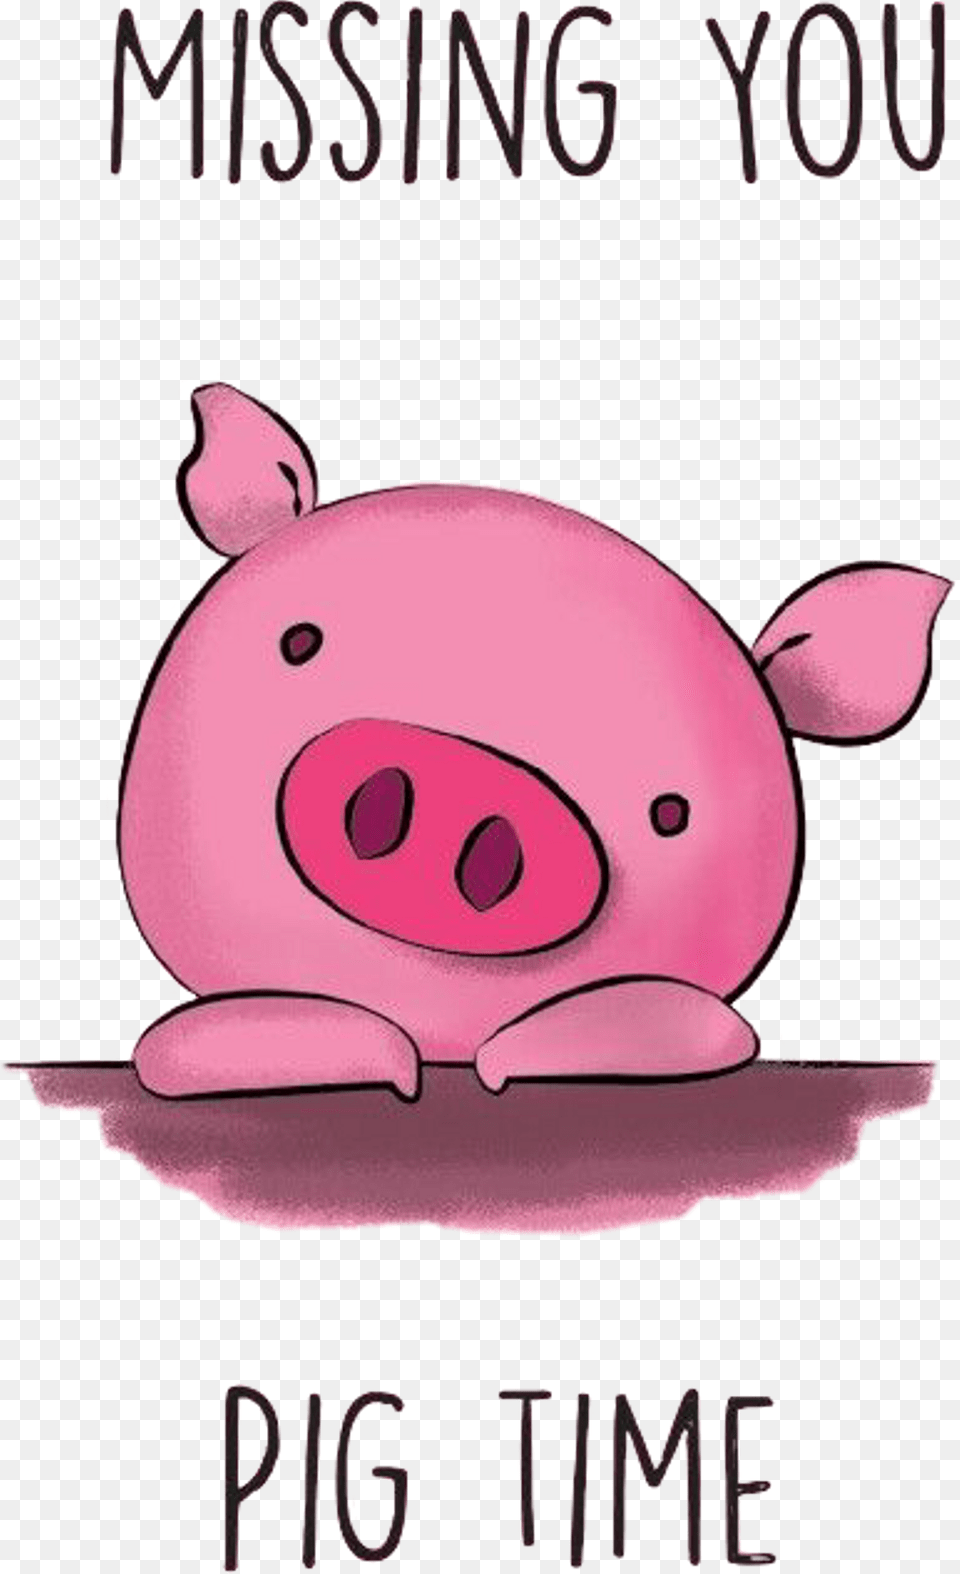 Cute Pig Missyou Illustration Freetoedit Pig Miss You, Book, Publication Png Image